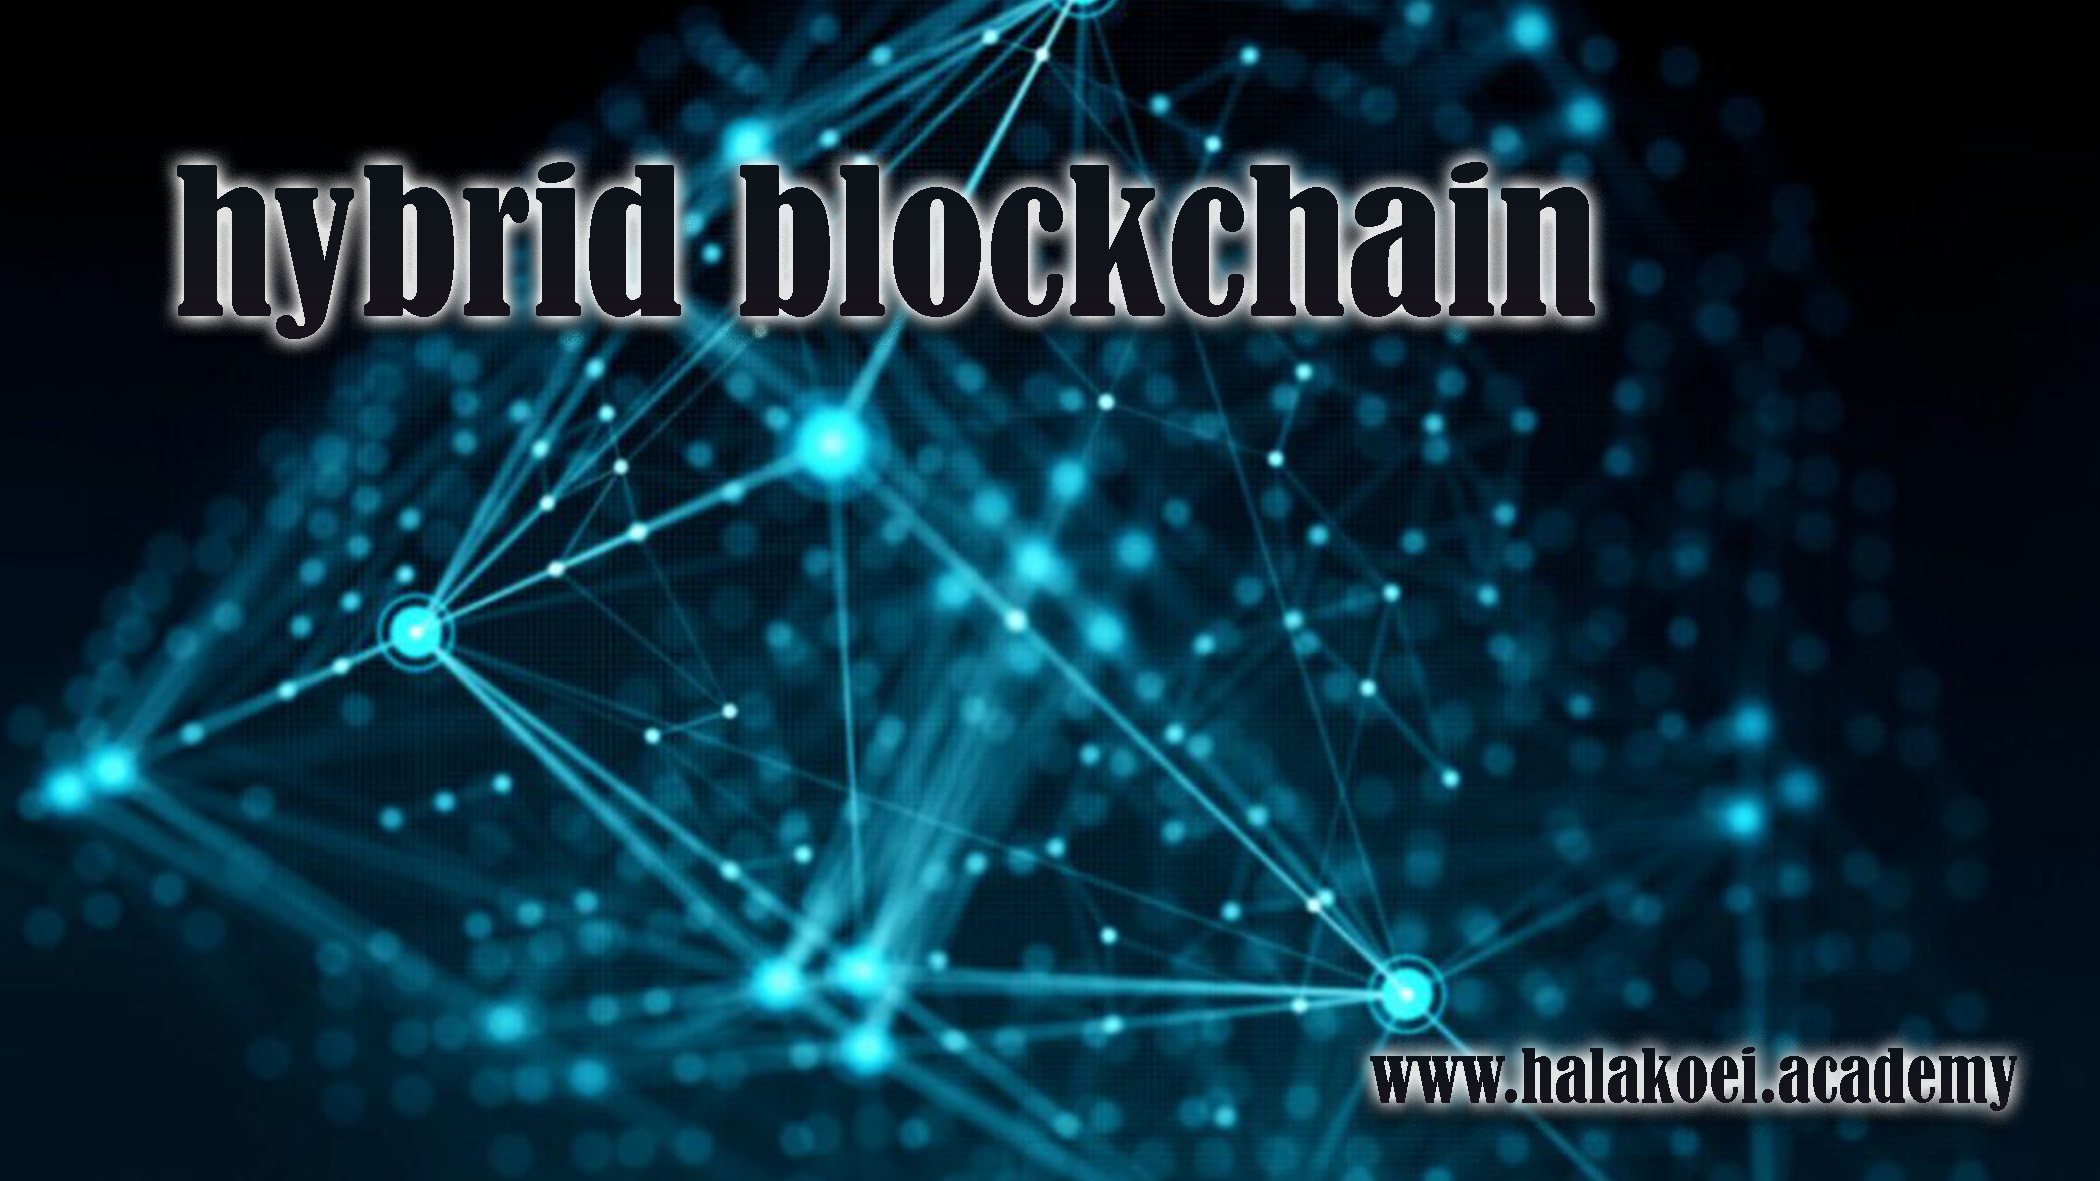 hybrid-blockchain